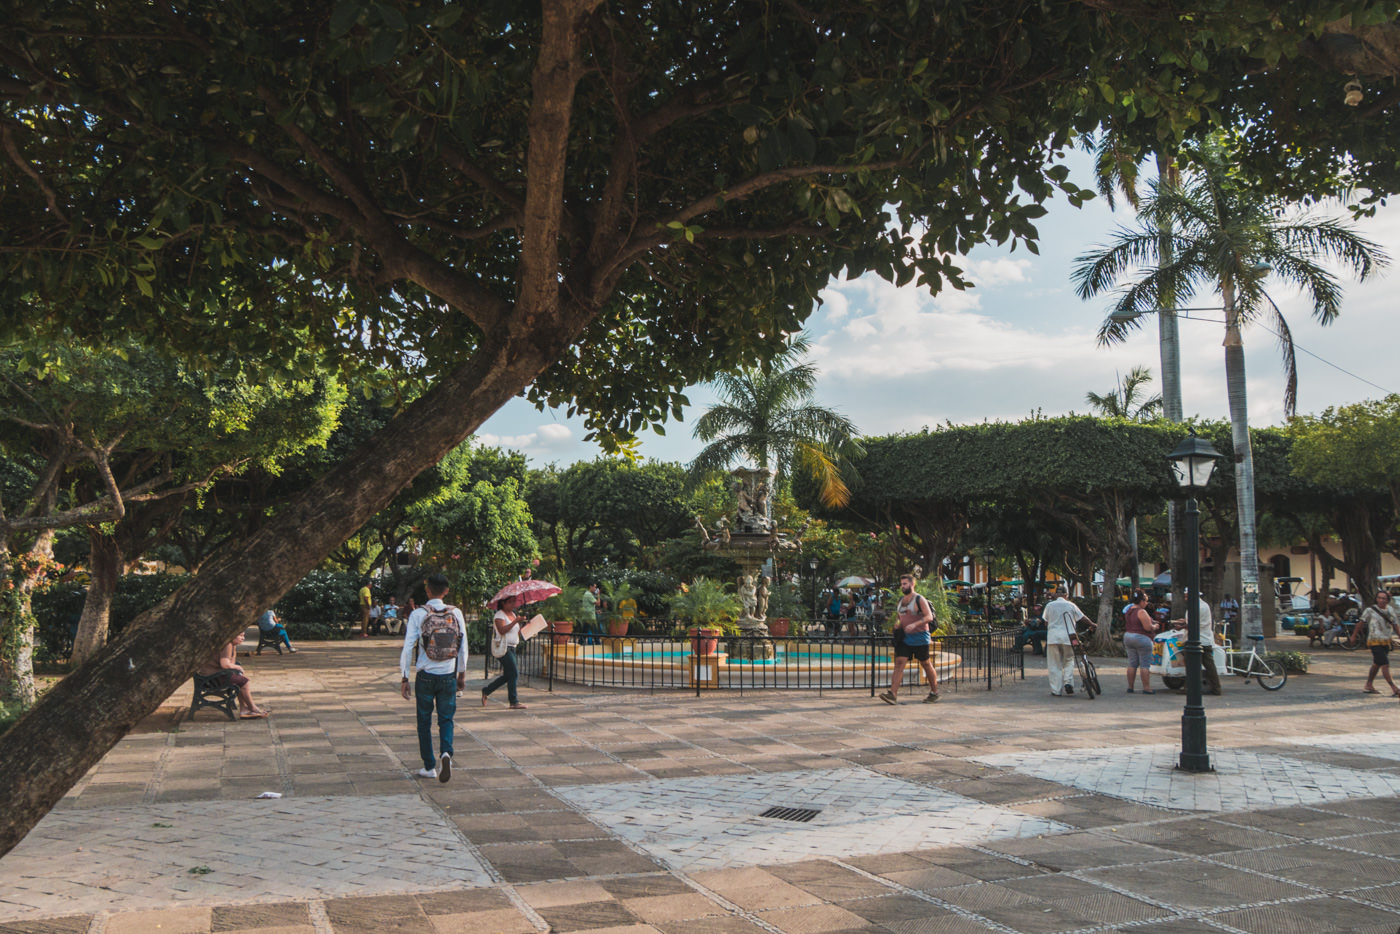 Parque Central in Granada, Nicaragua